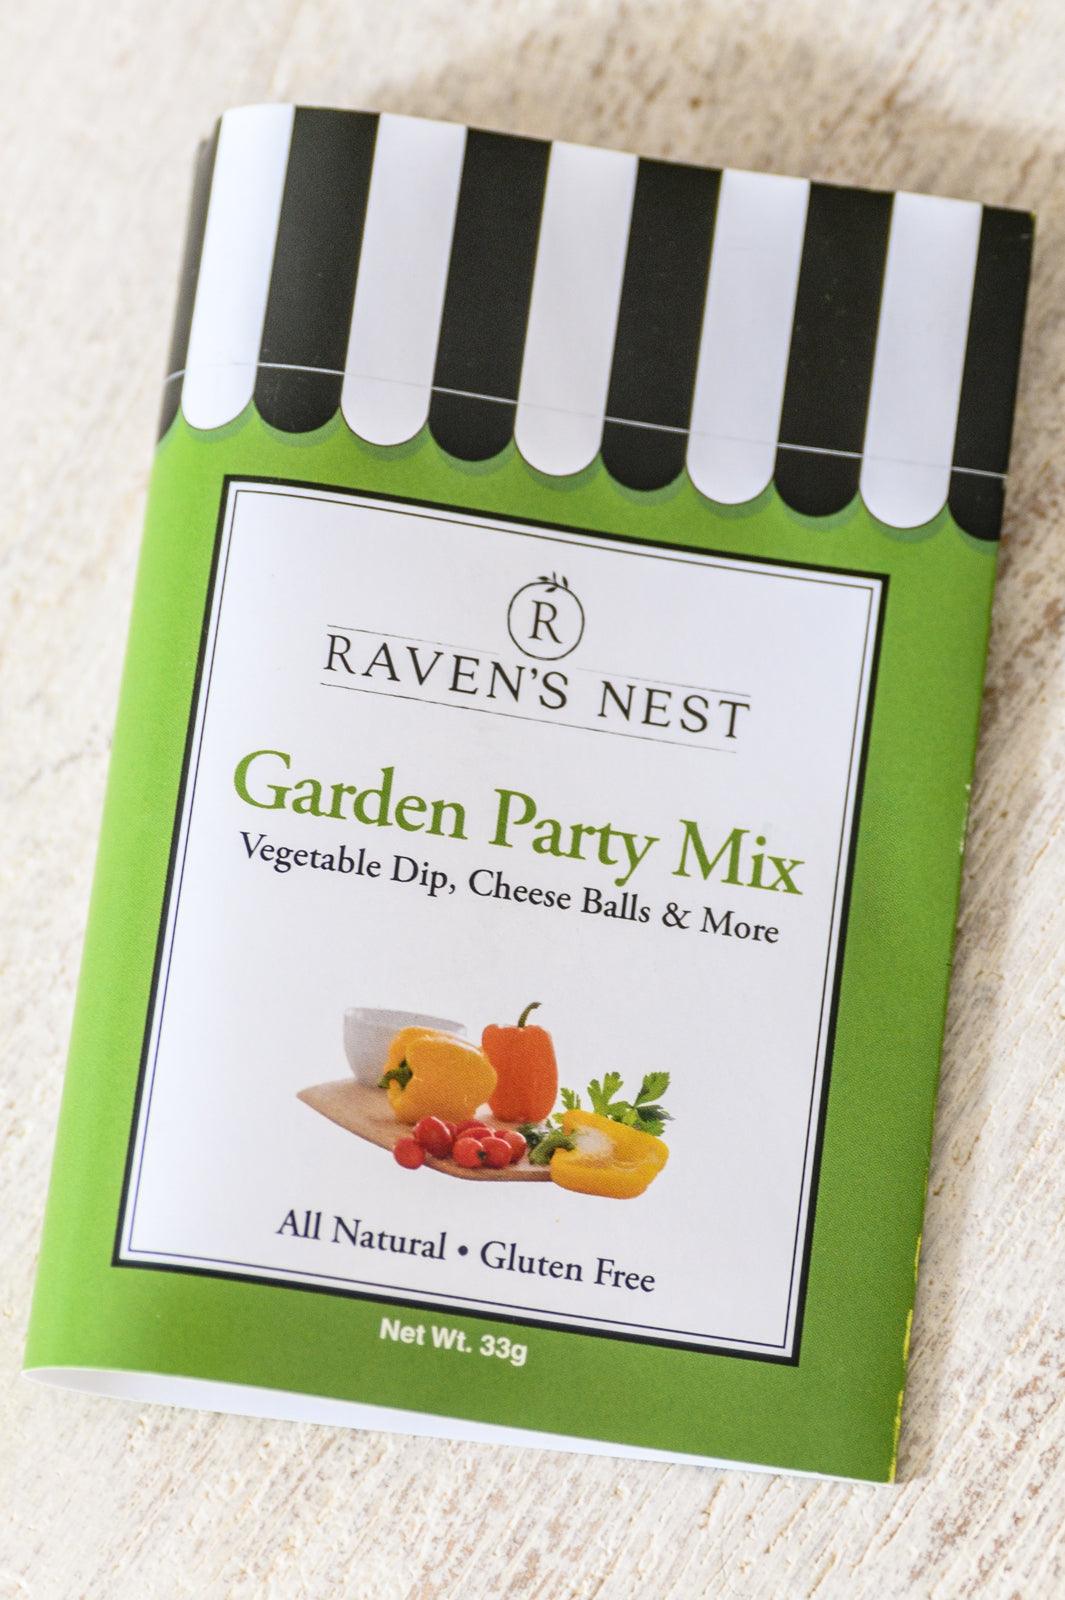 Garden Party Mix & Seasoning By Raven's Nest - The Fiery Jasmine